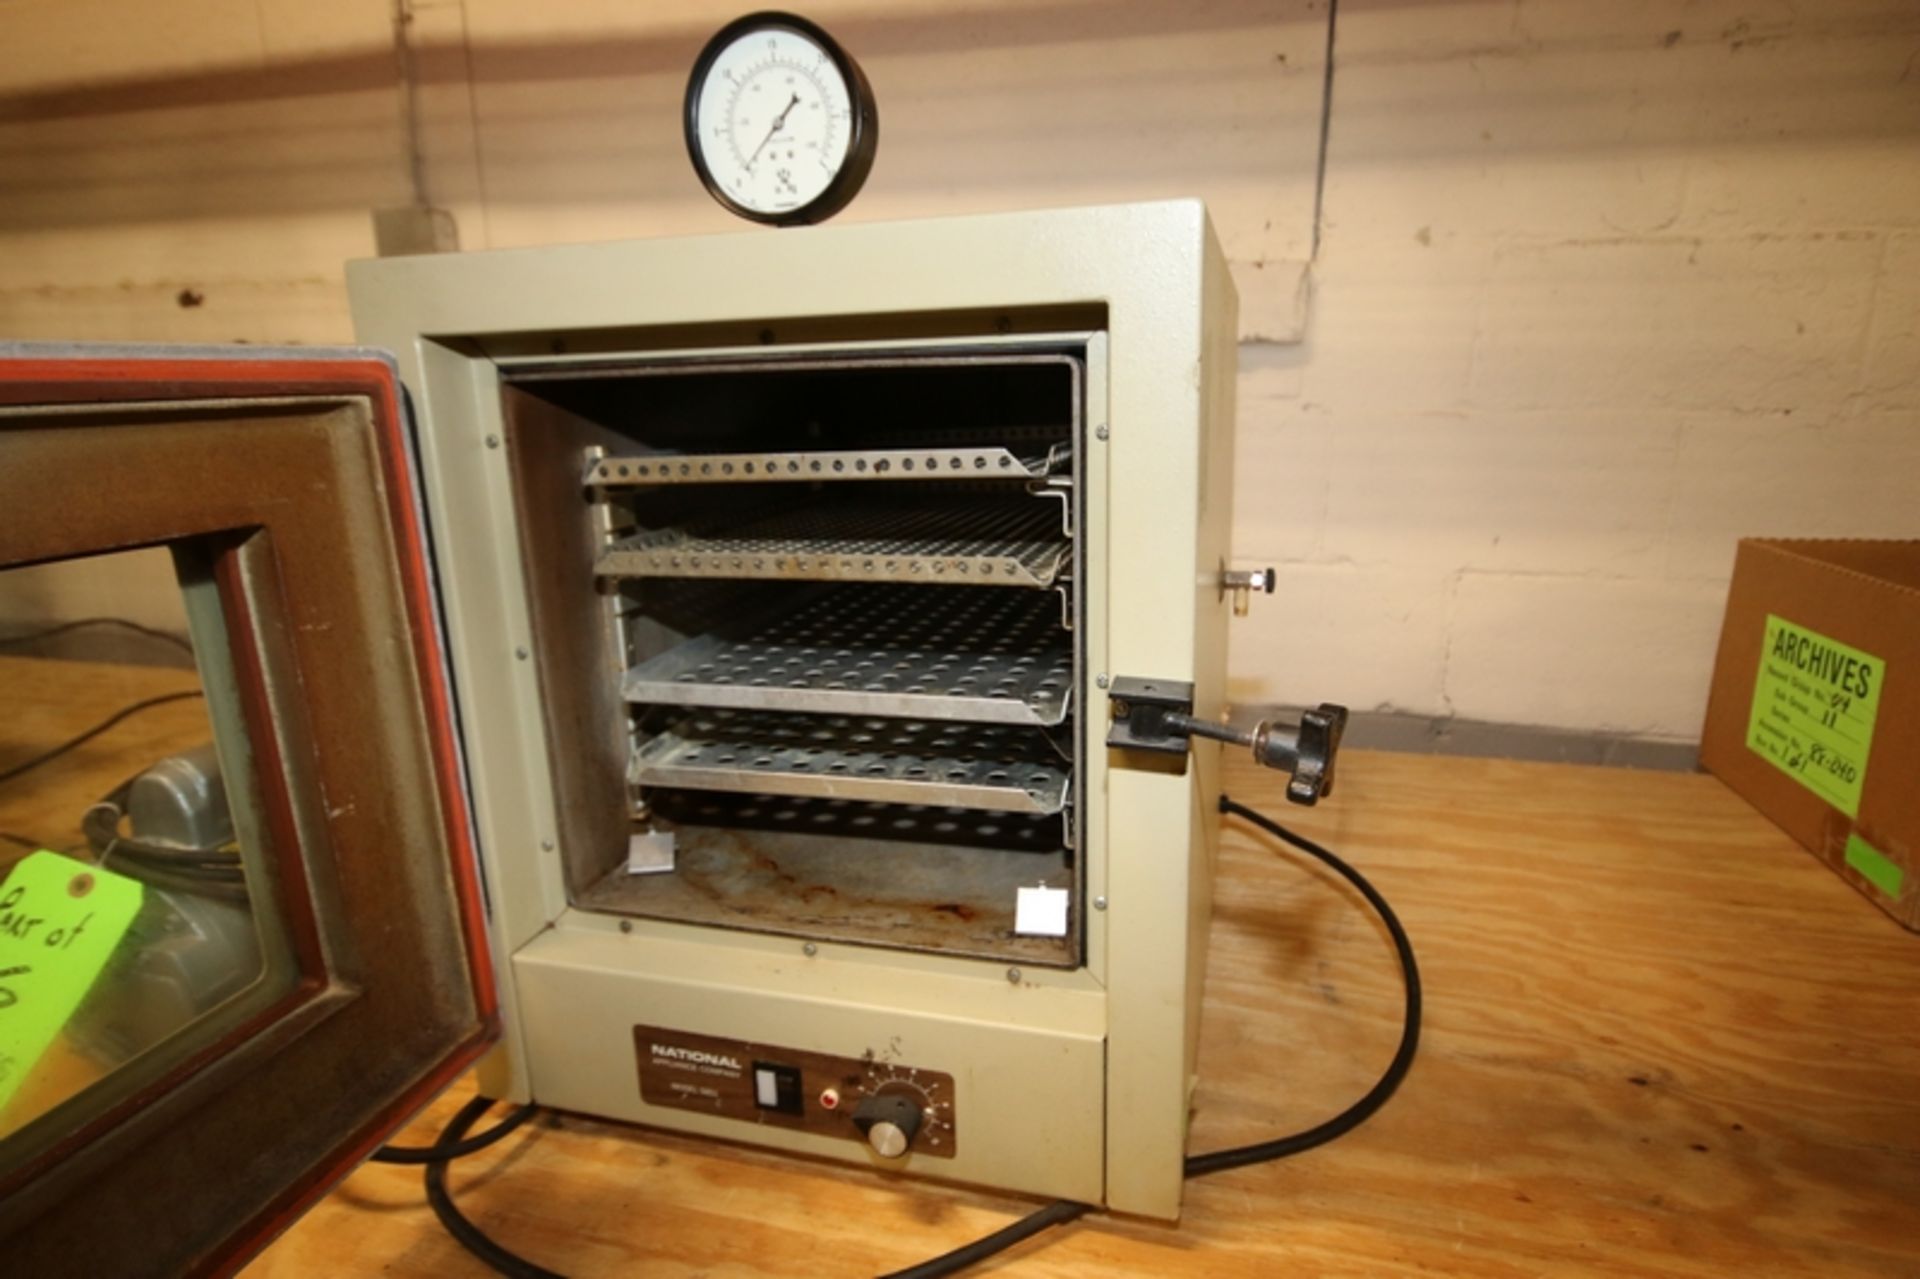 (2) Pcs. National Vacuum Oven, Model 5851-9, S/N 7-79-1347-52 with Gast Vacuum Pump, Model 0823- - Image 2 of 2